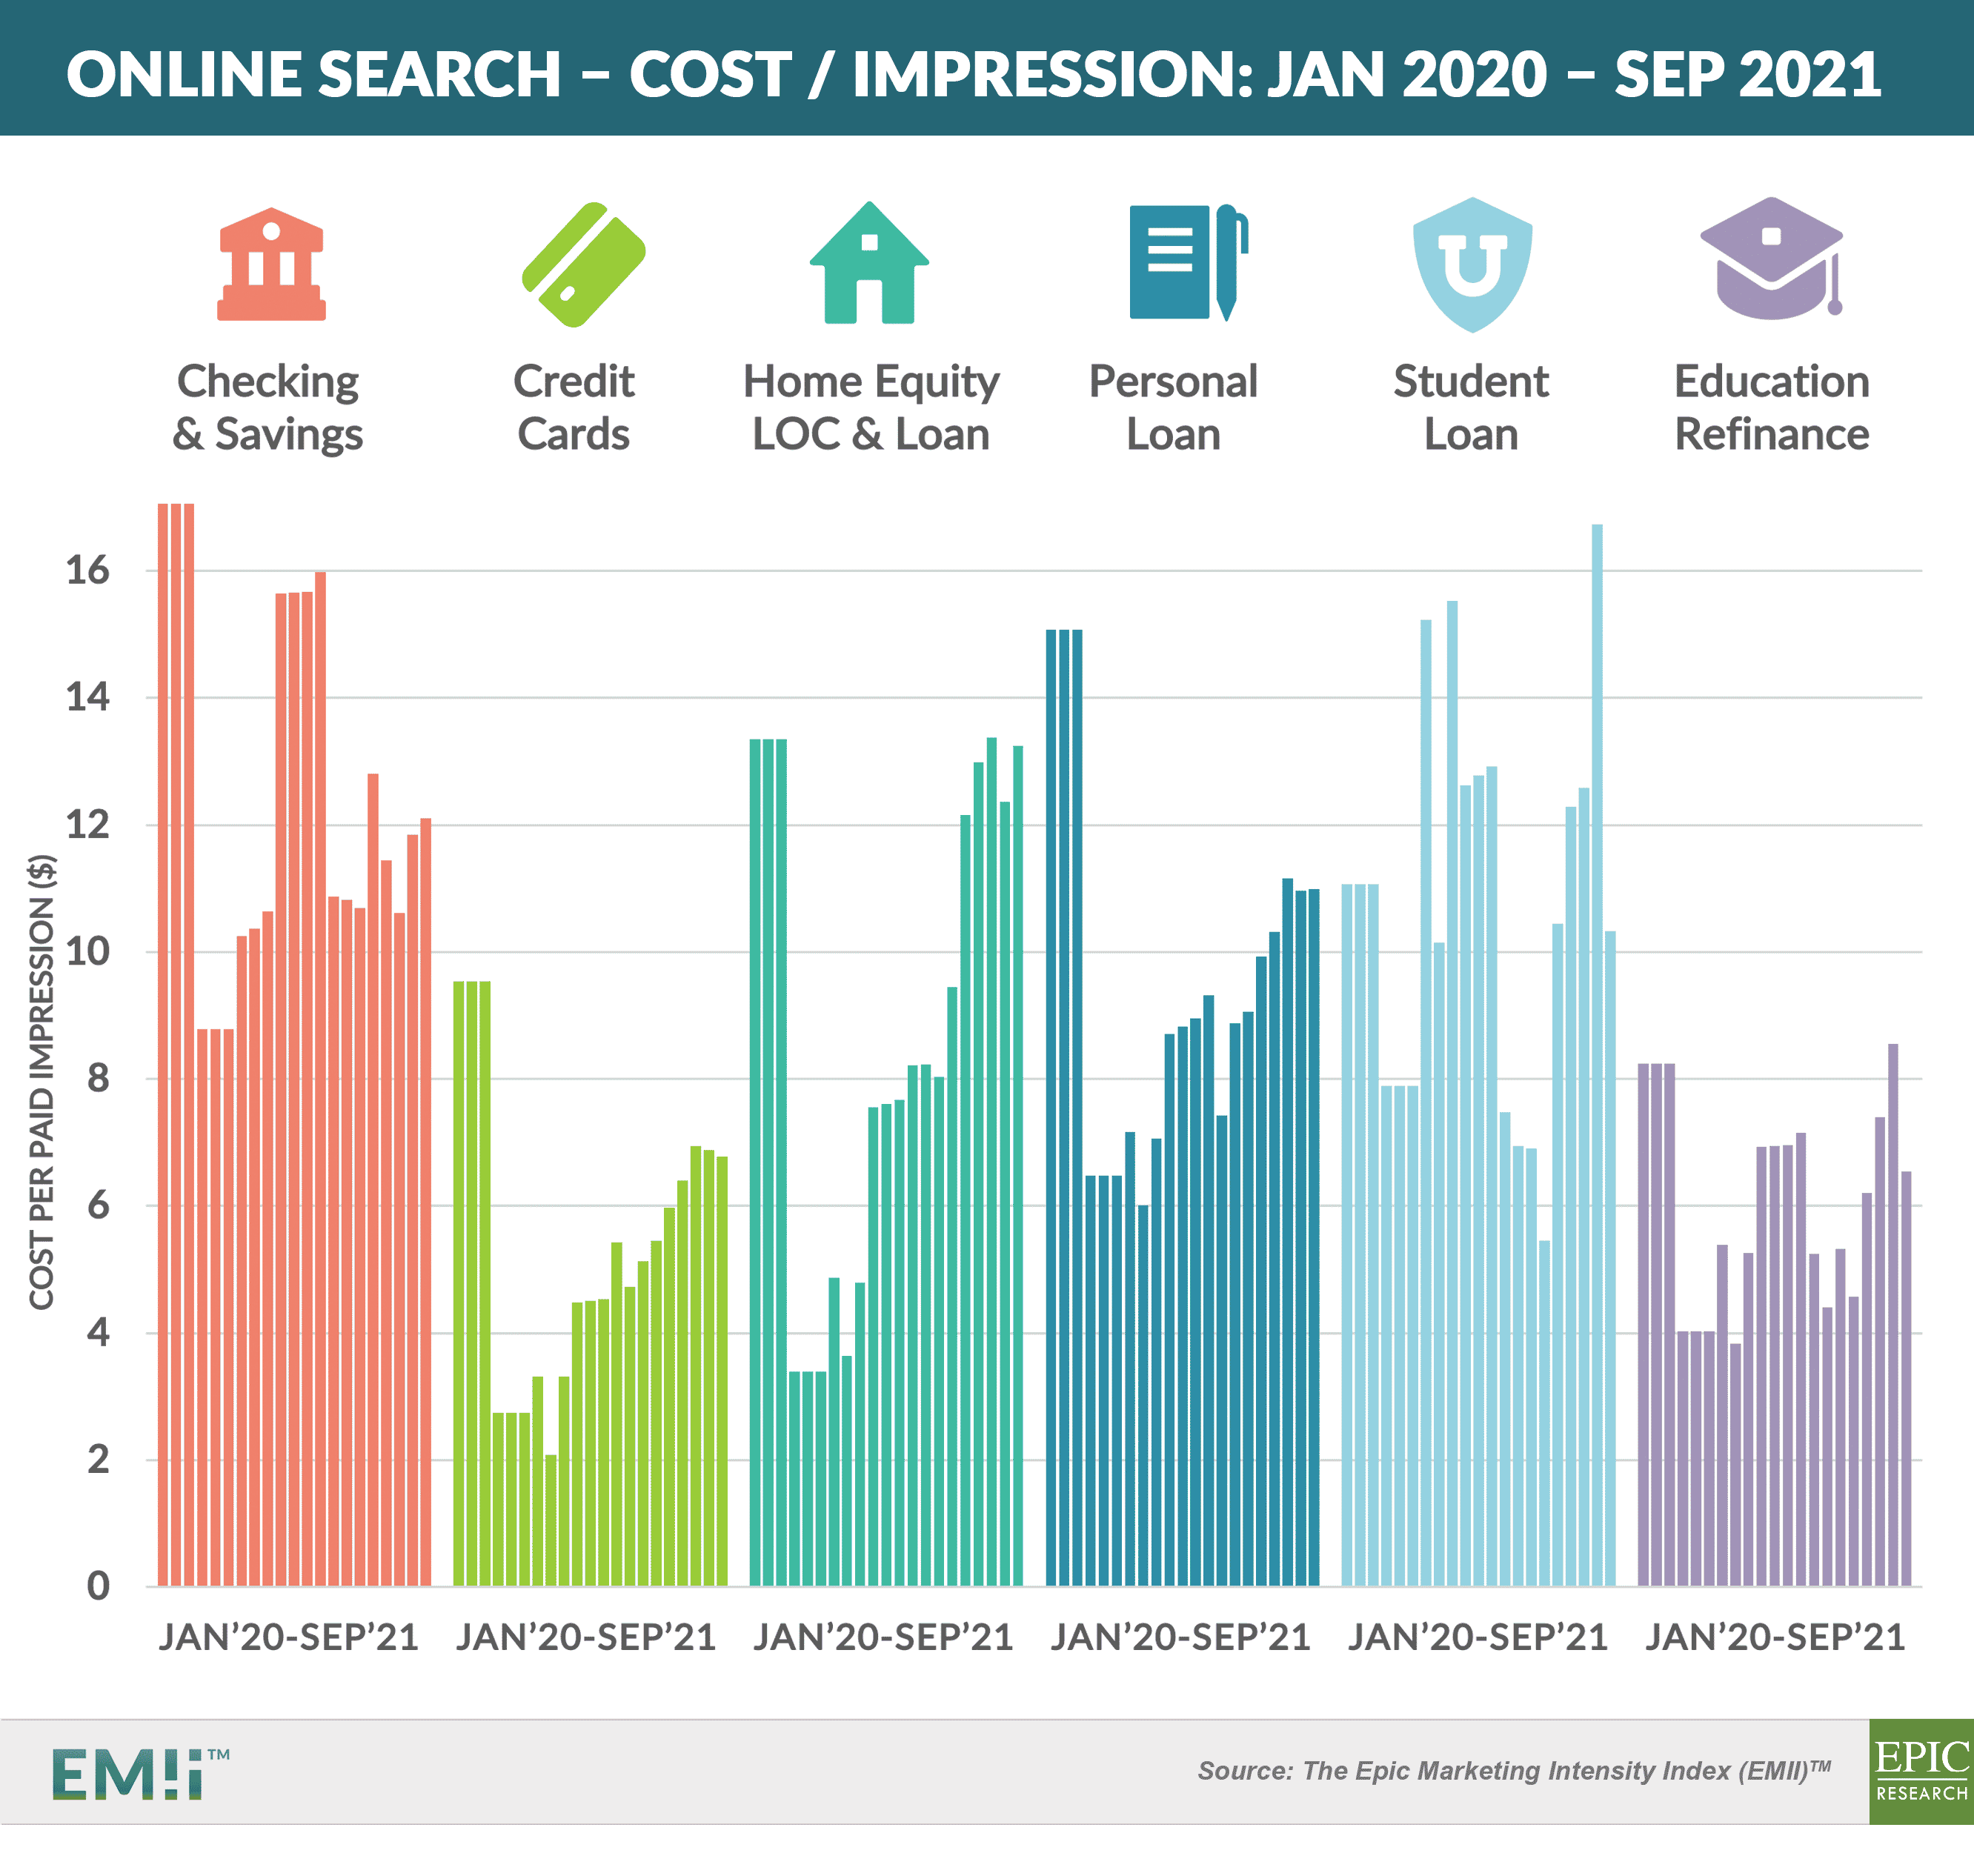 EMII - Google Search - Cost per impression JAN 20-SEP 21